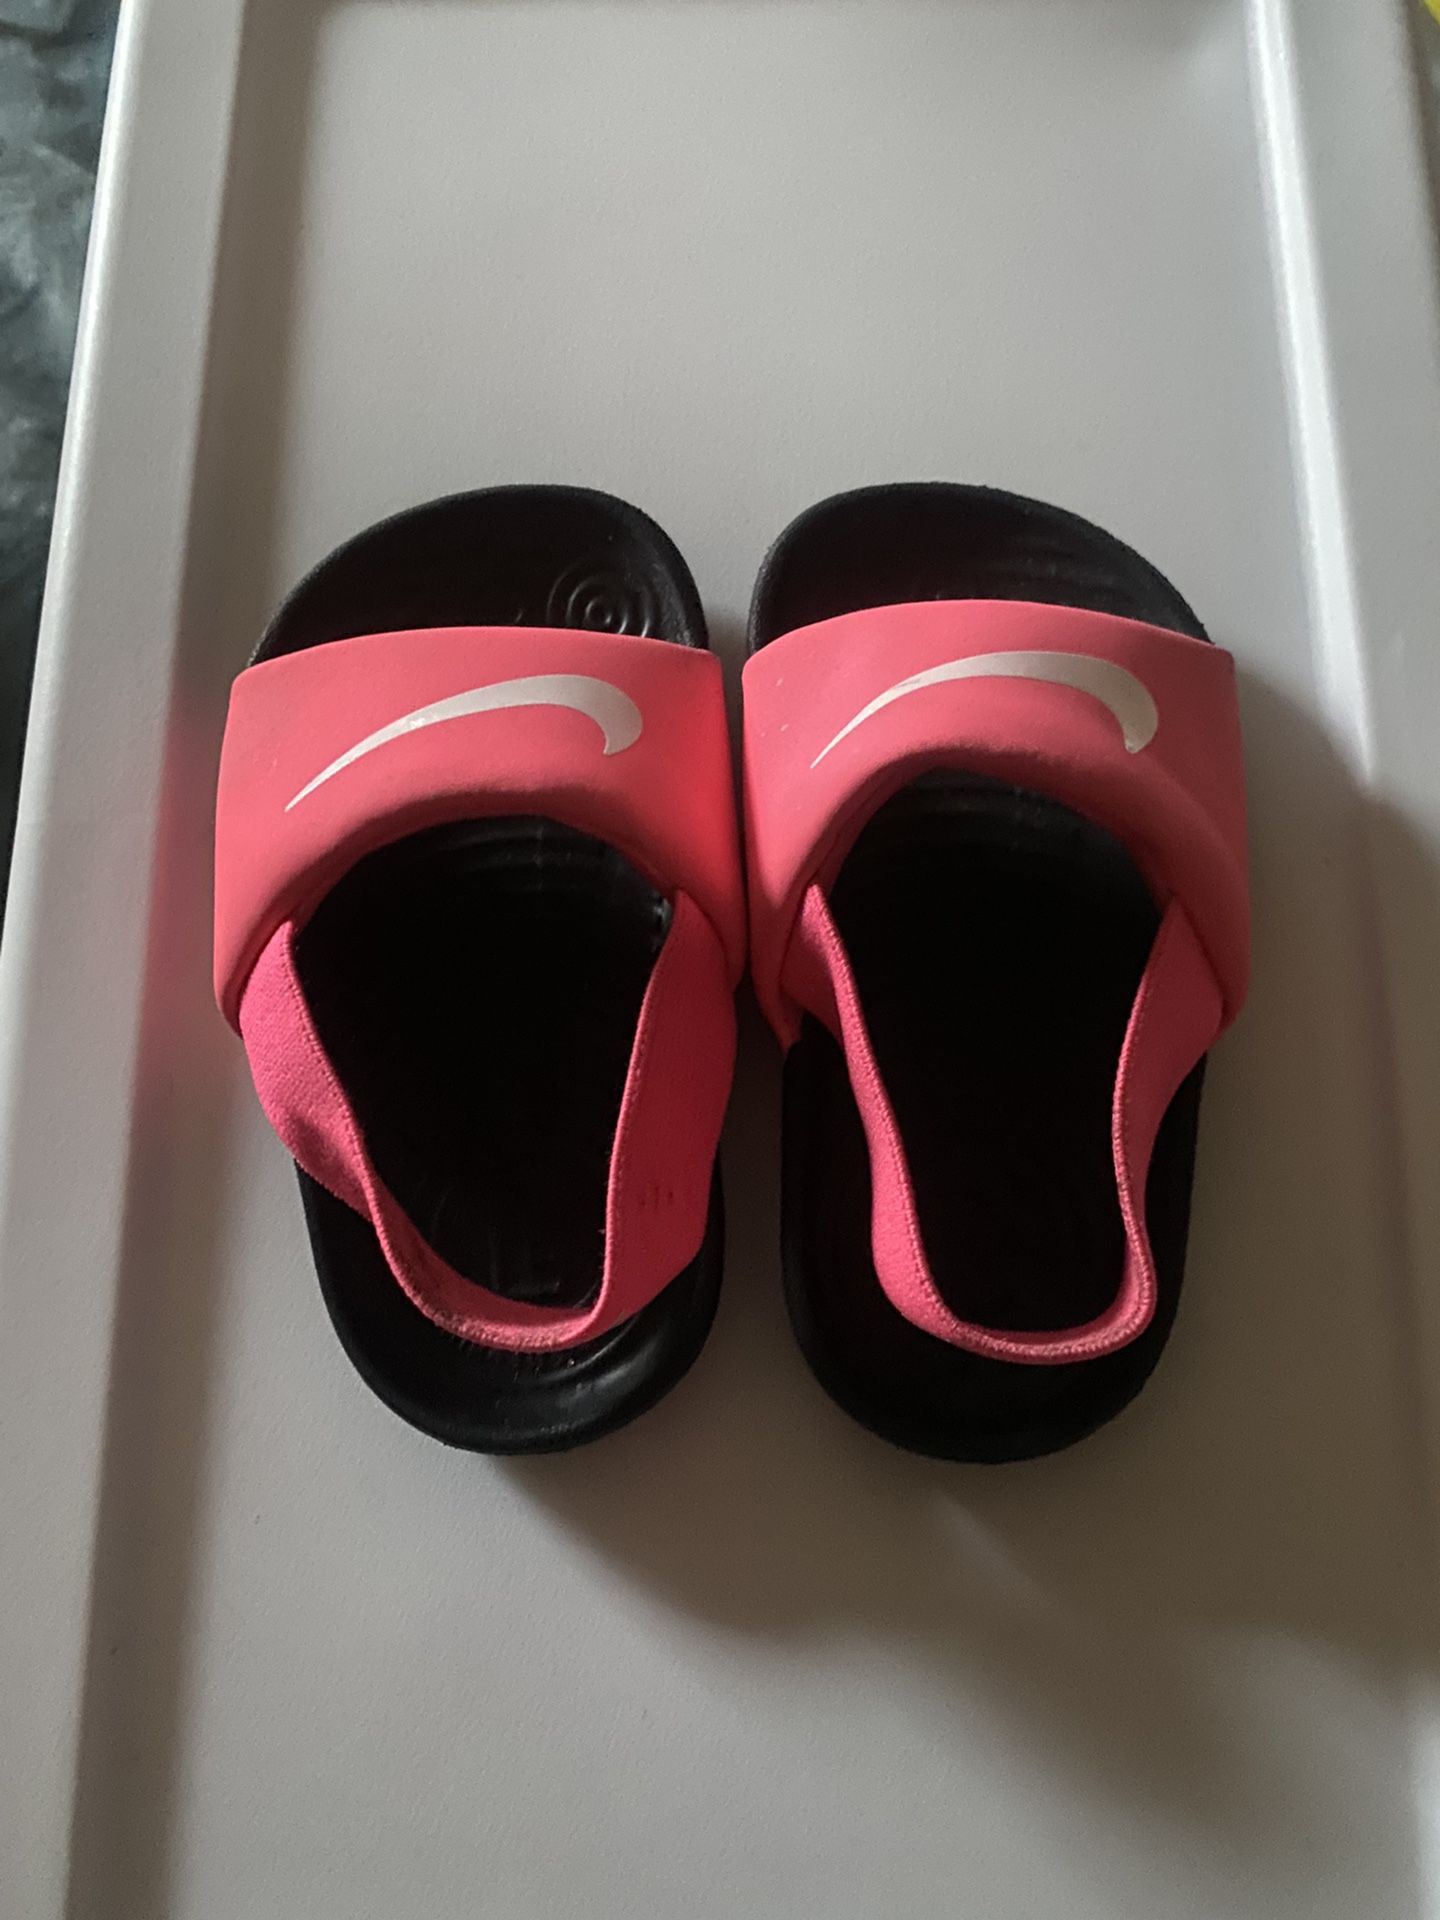 telex Volwassen tyfoon Baby Girl Nike Sandals for Sale in Pasadena, CA - OfferUp